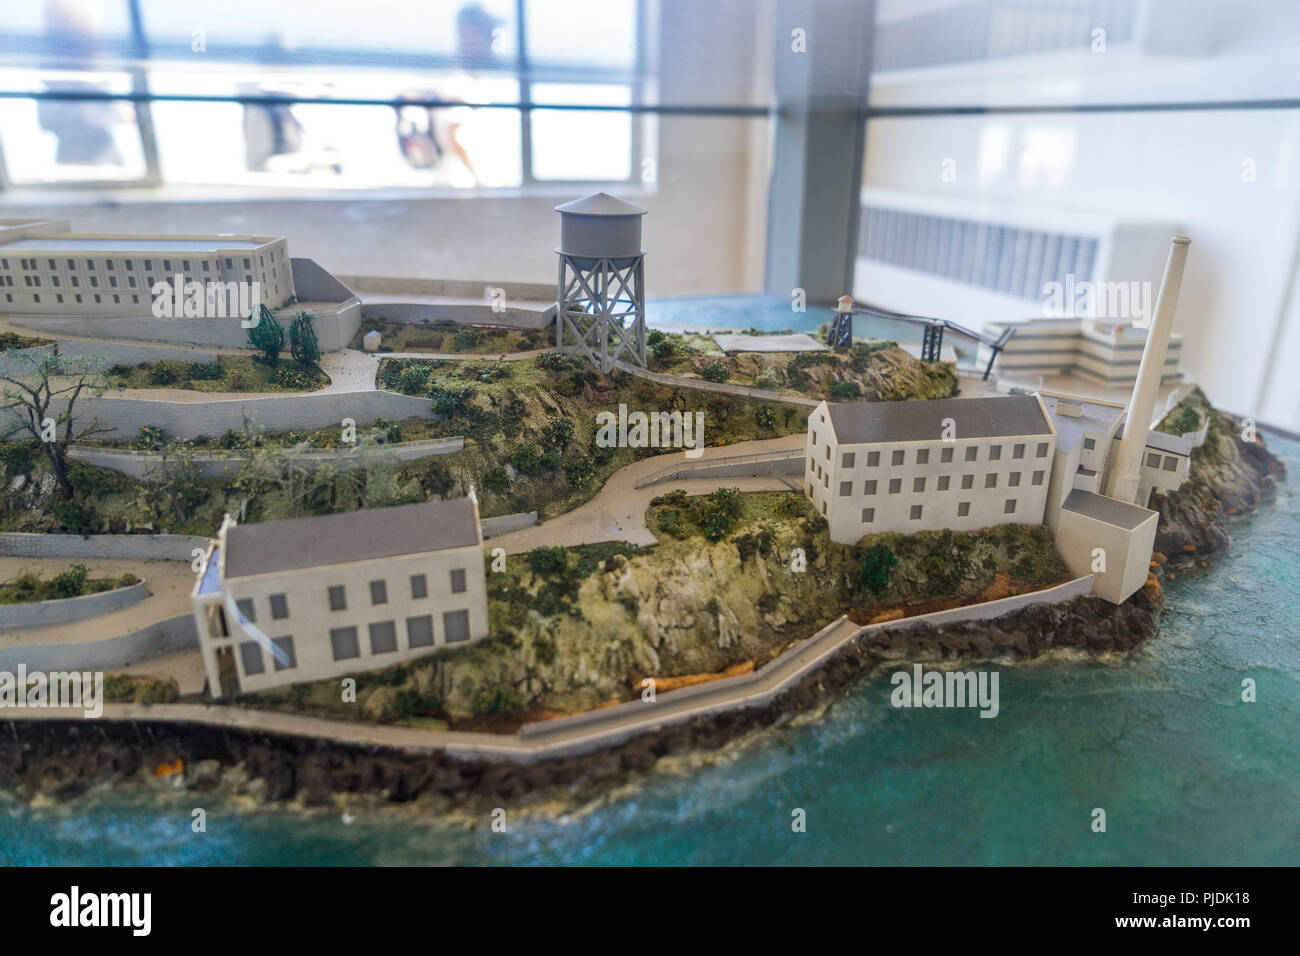 San Francisco, USA - The Alcatraz prison model, view from above Stock Photo